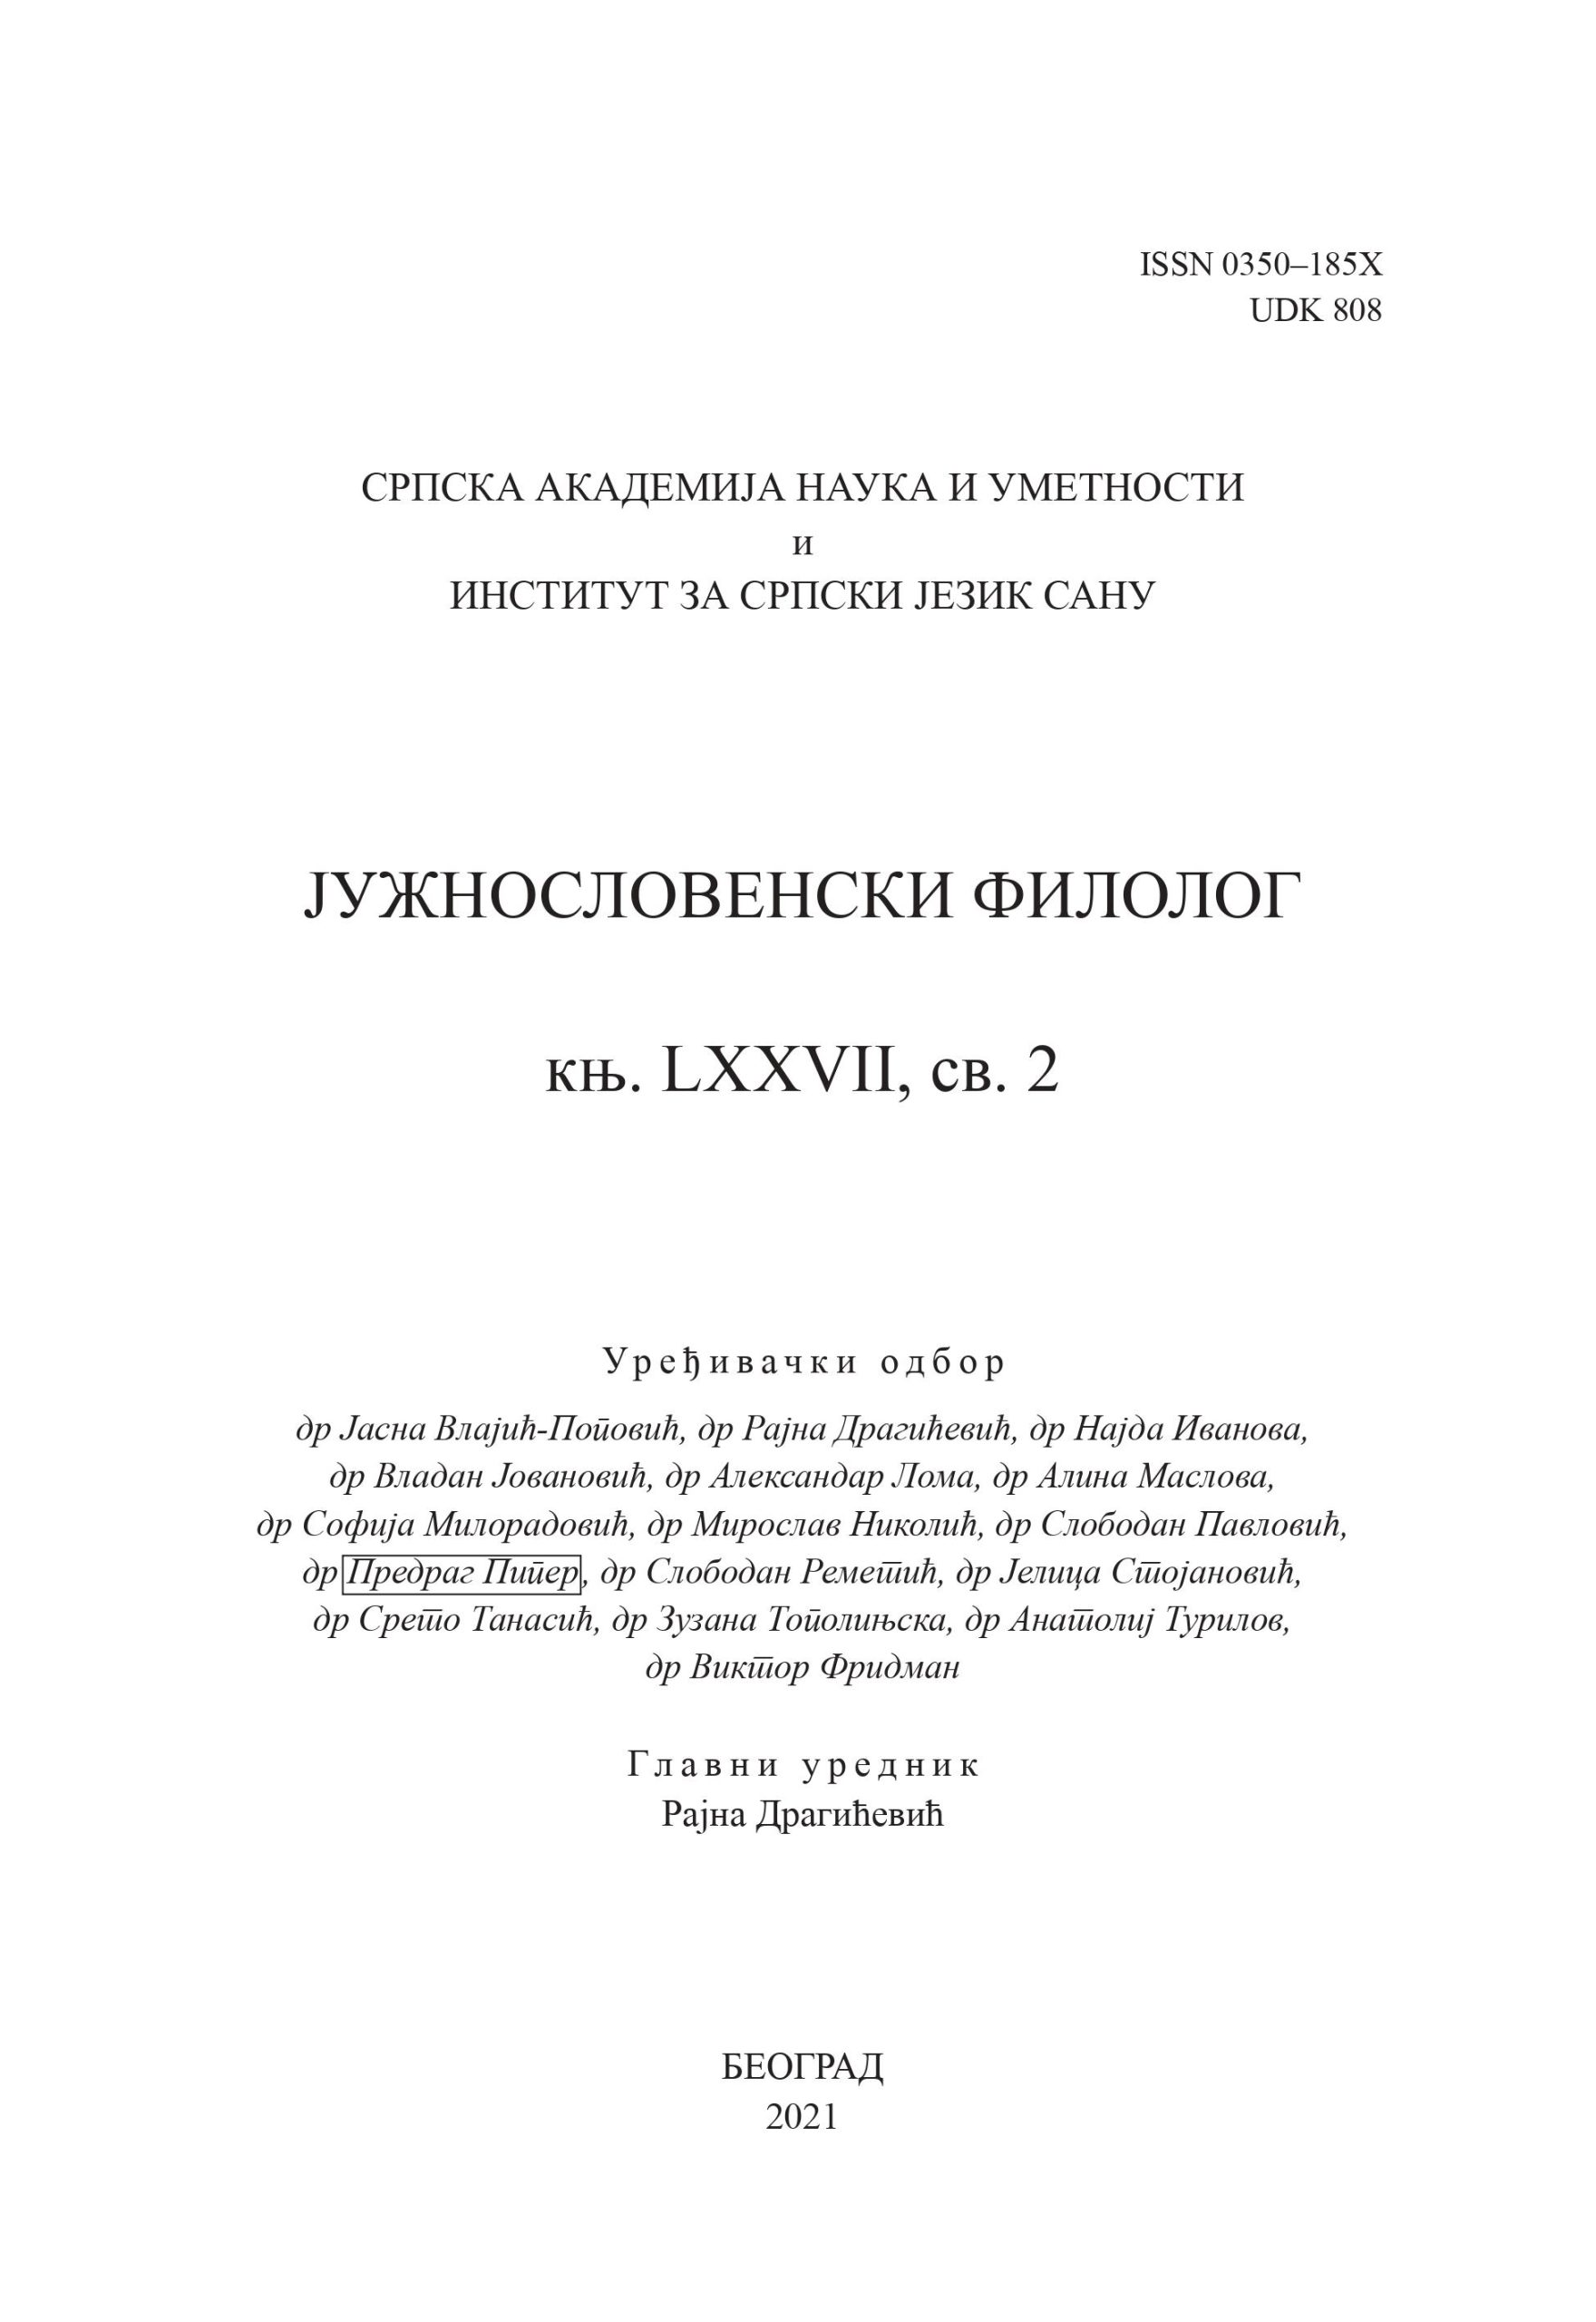 South Slavic Philologist